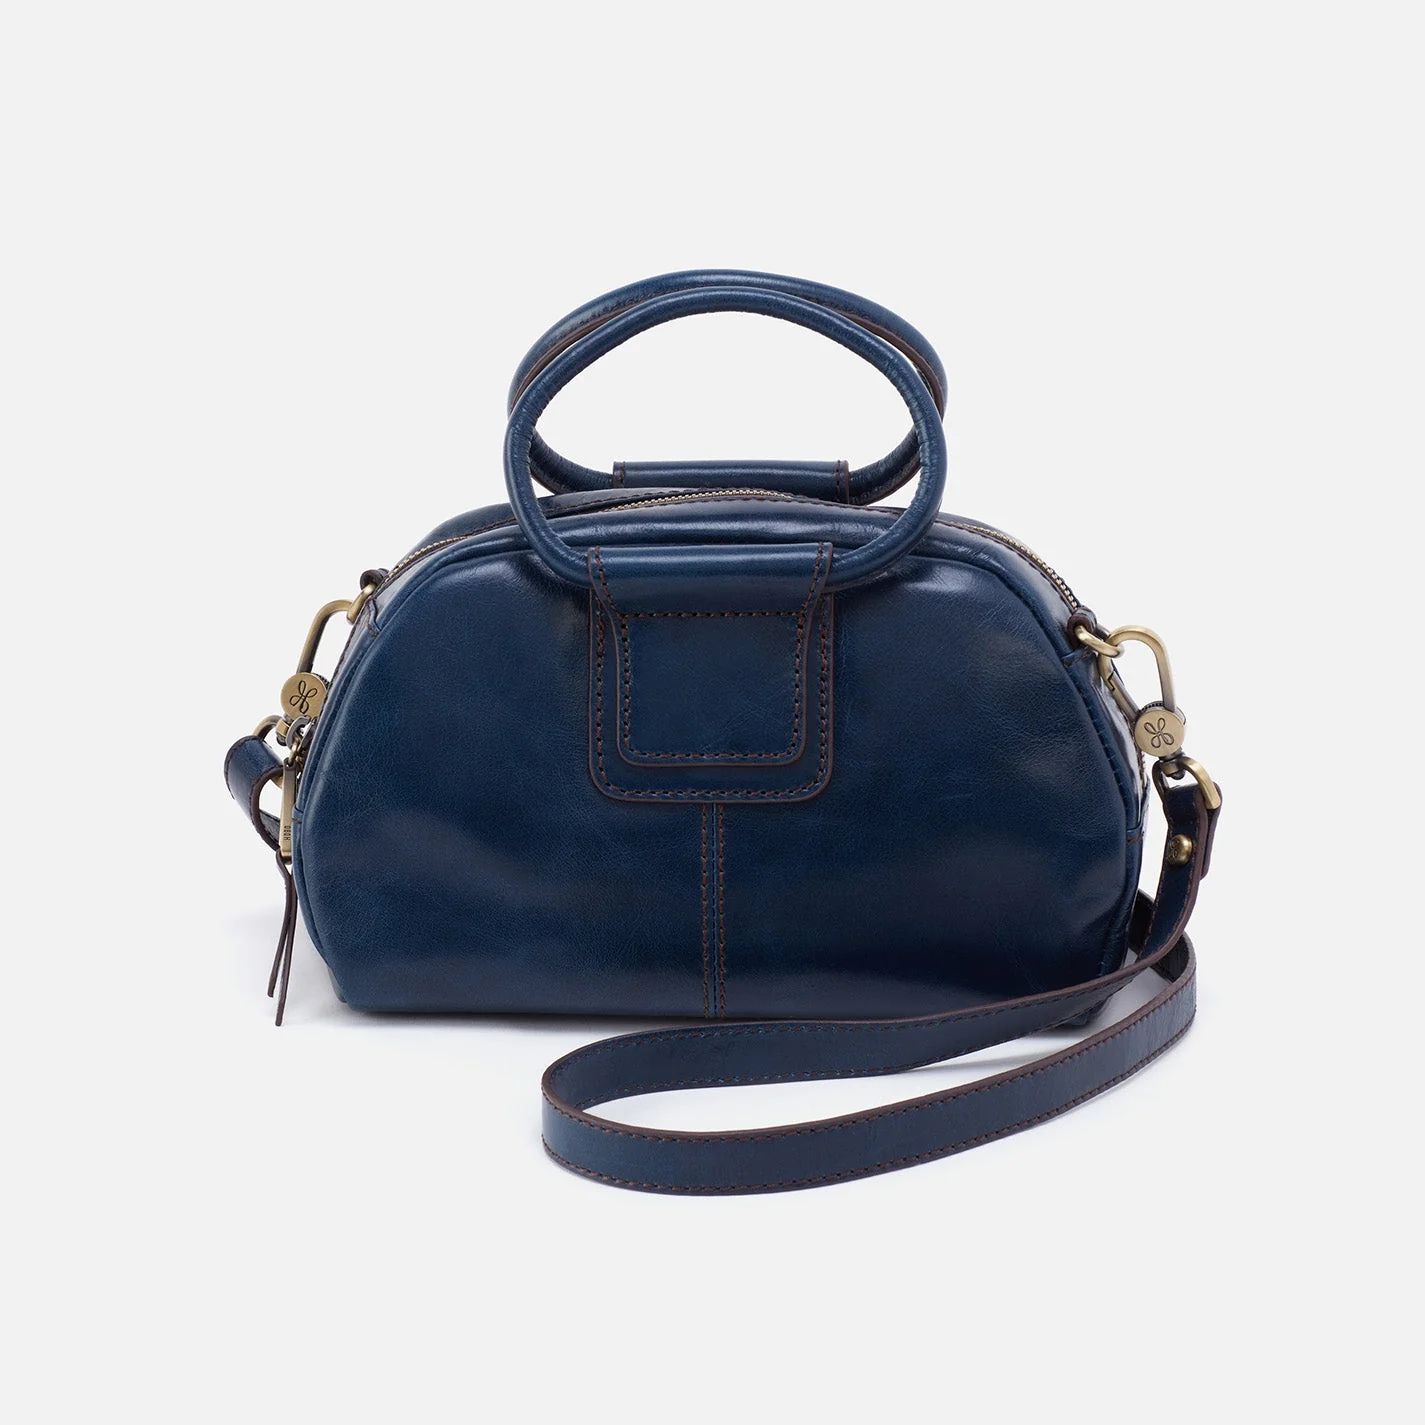 Sheila Small Mini Satchel in Polished Leather - Denim | HOBO Bags